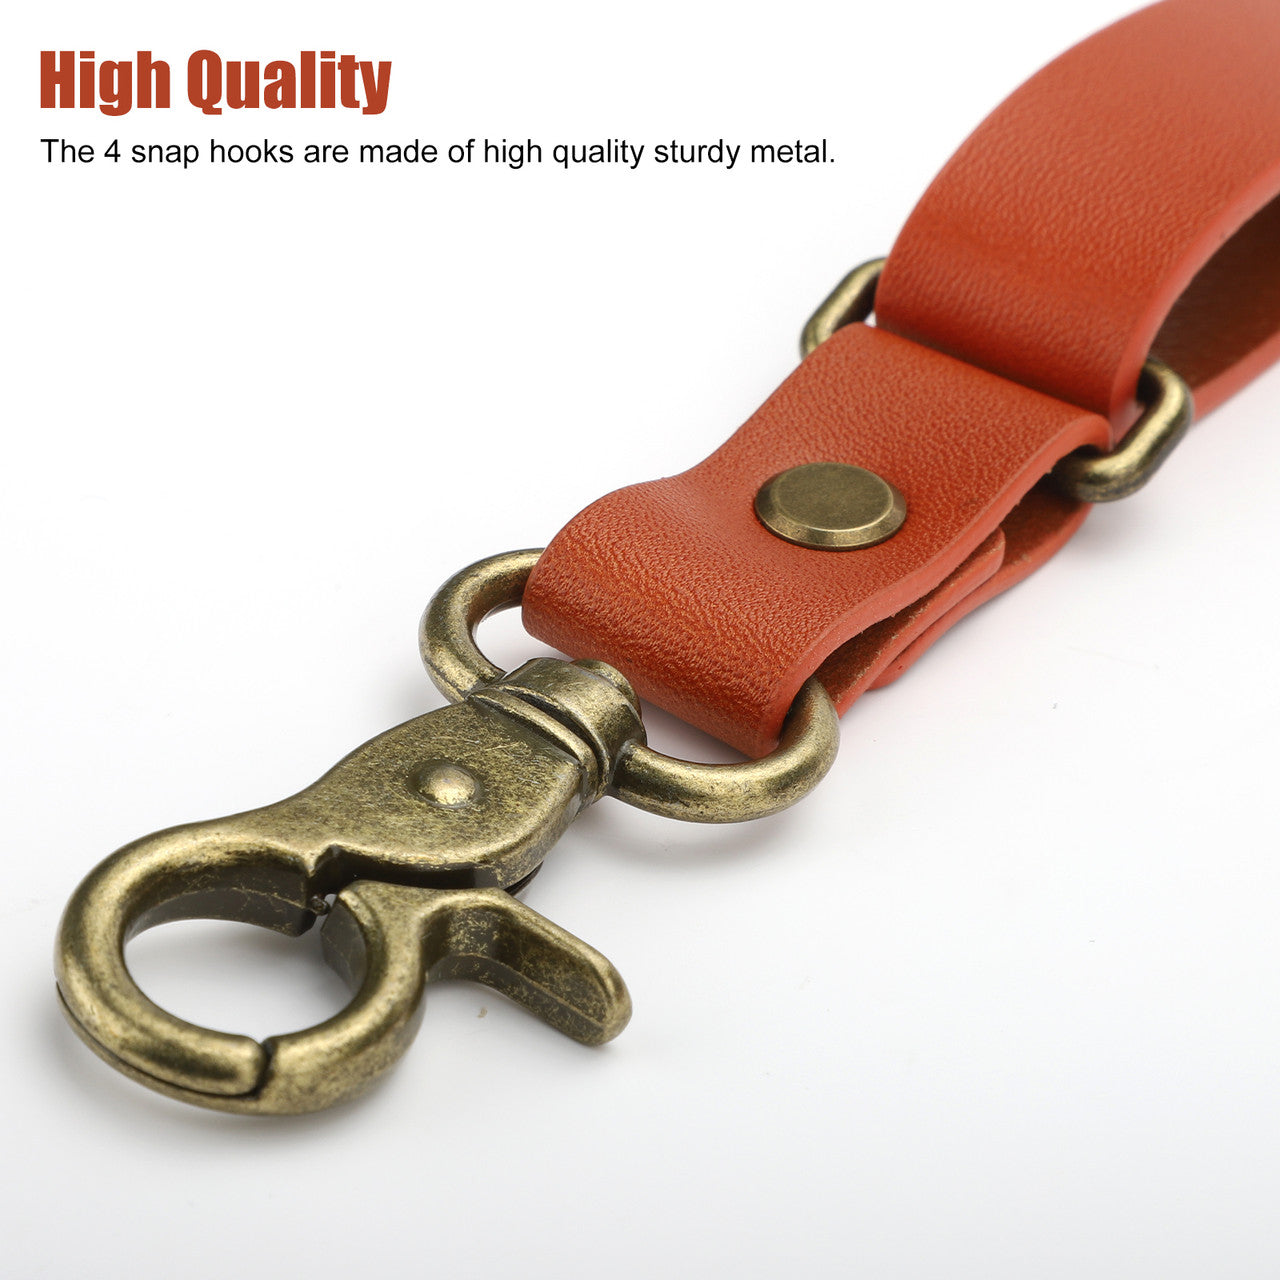 Adjustable Soft Leather Suspenders Y Design Suspenders - with 4 Metal Clips for Groomsmen Wedding Gift (Brown)